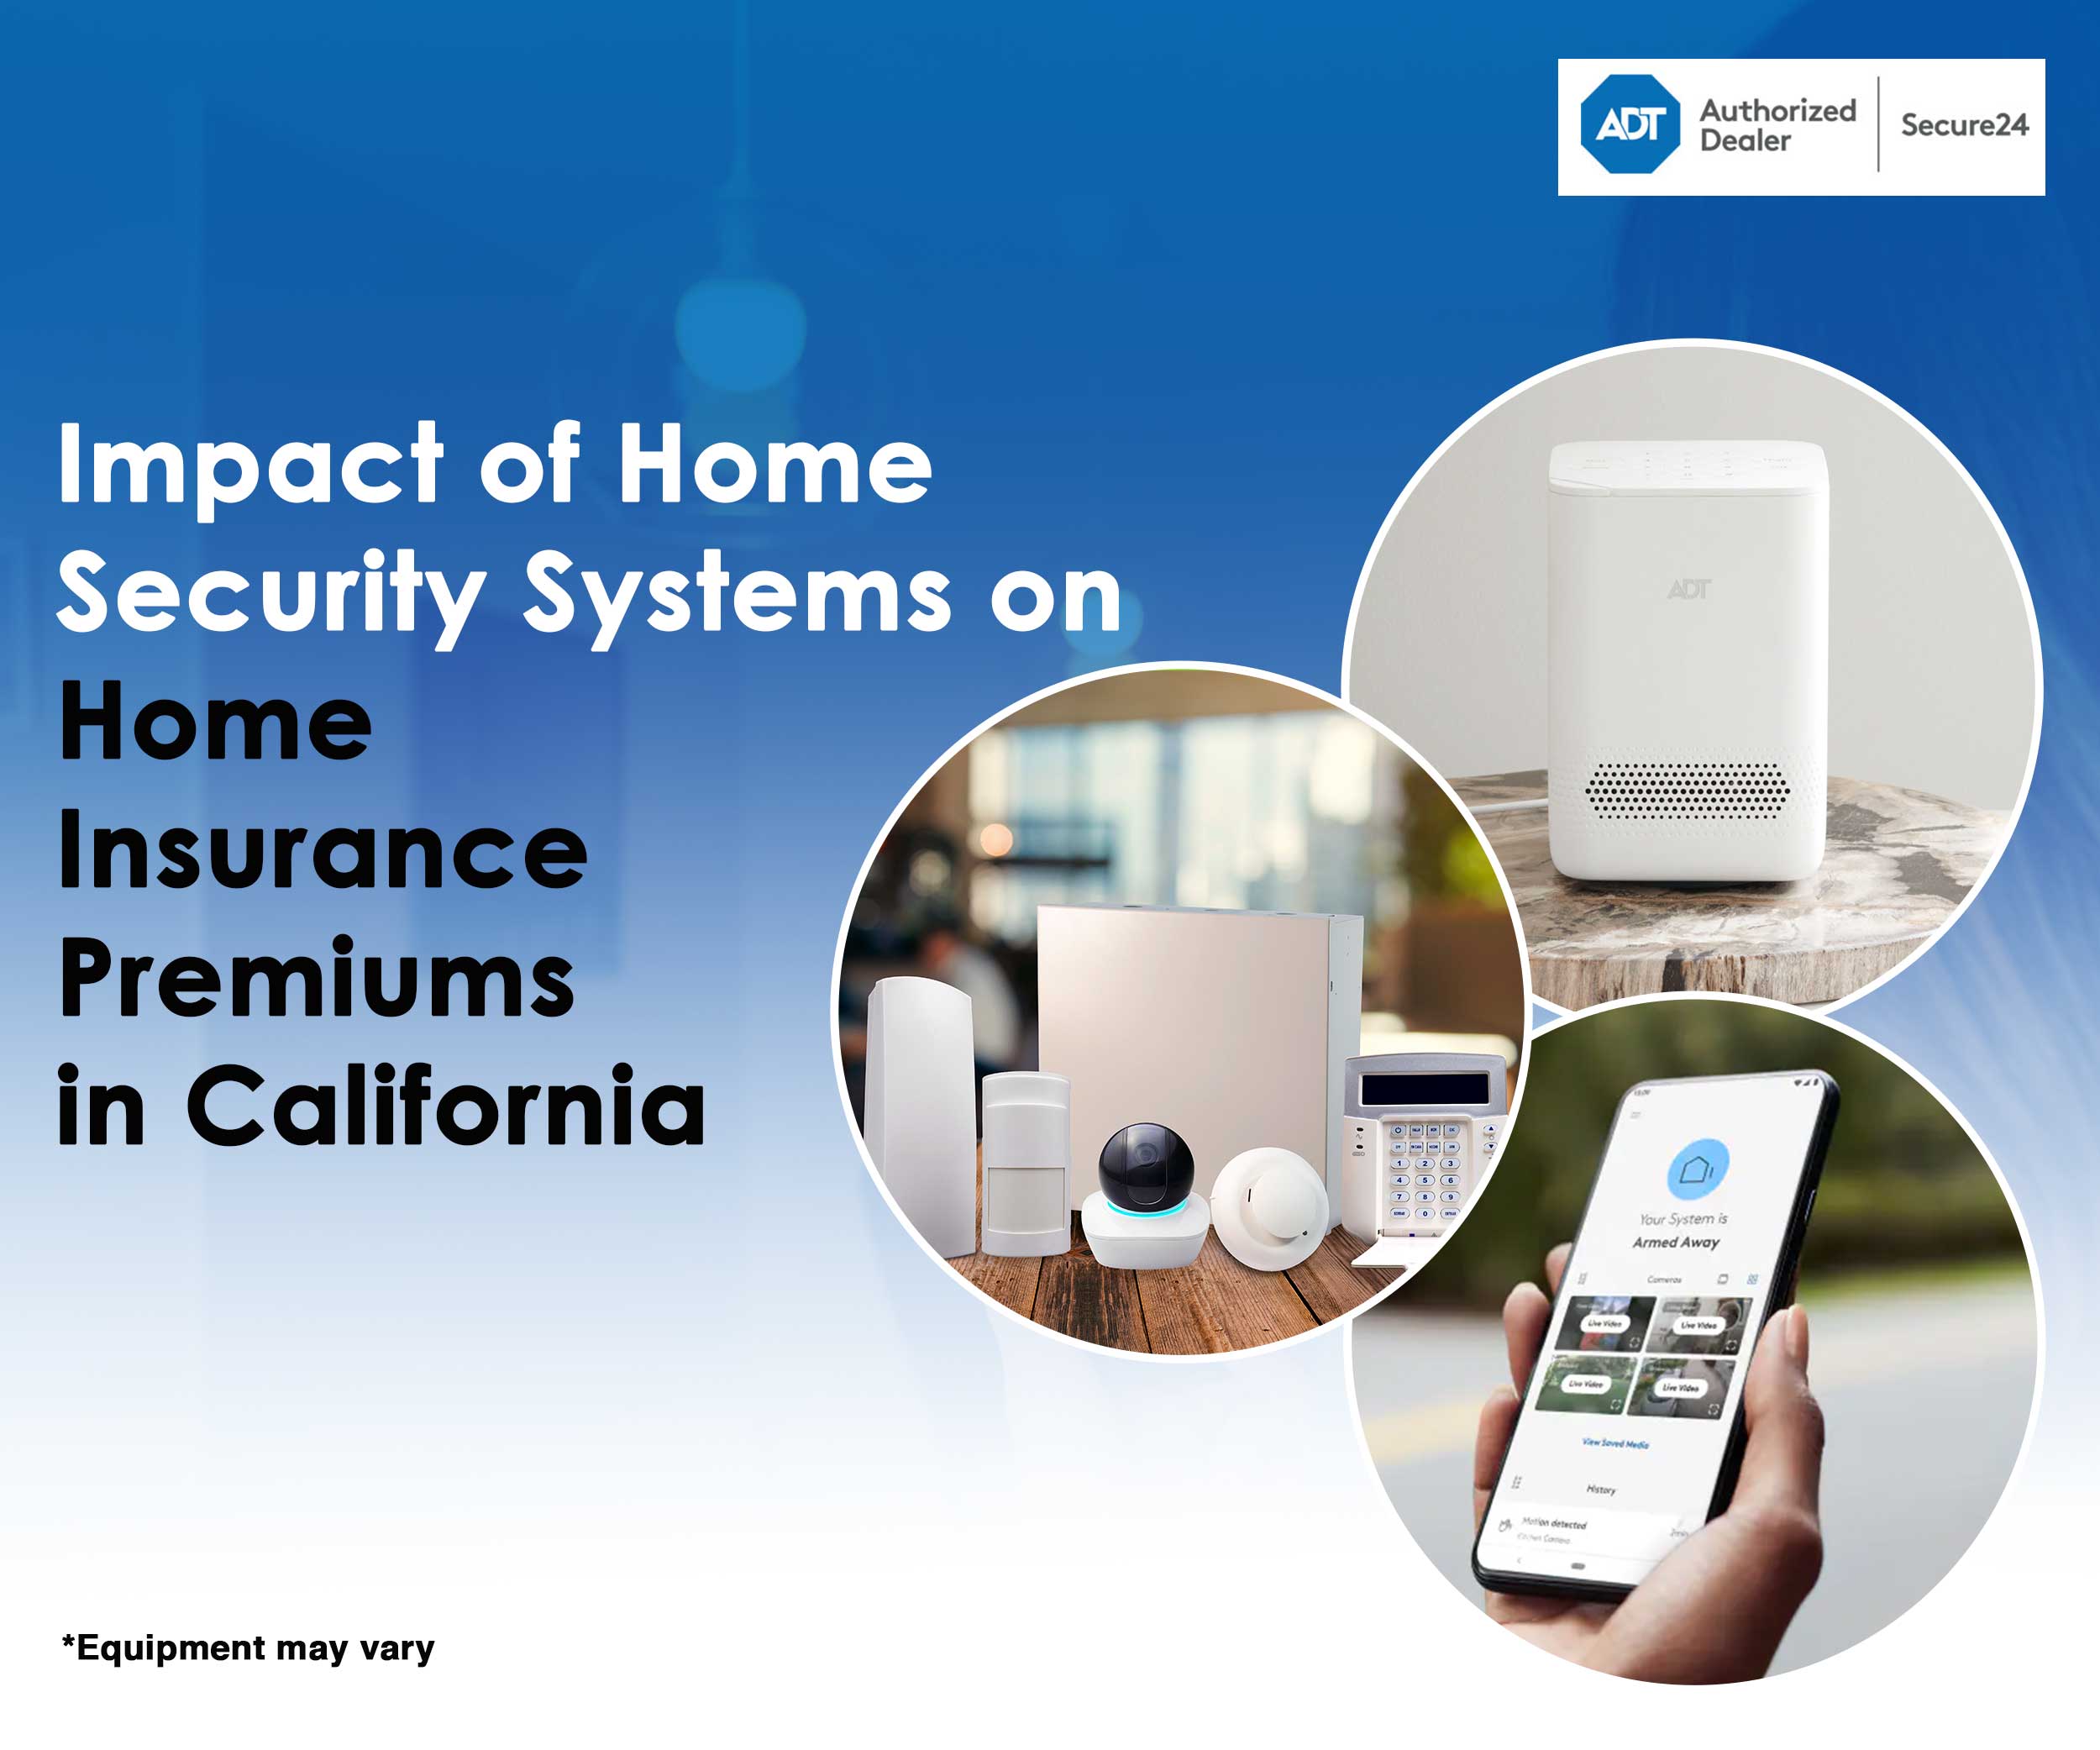 Home Insurance Premiums in California